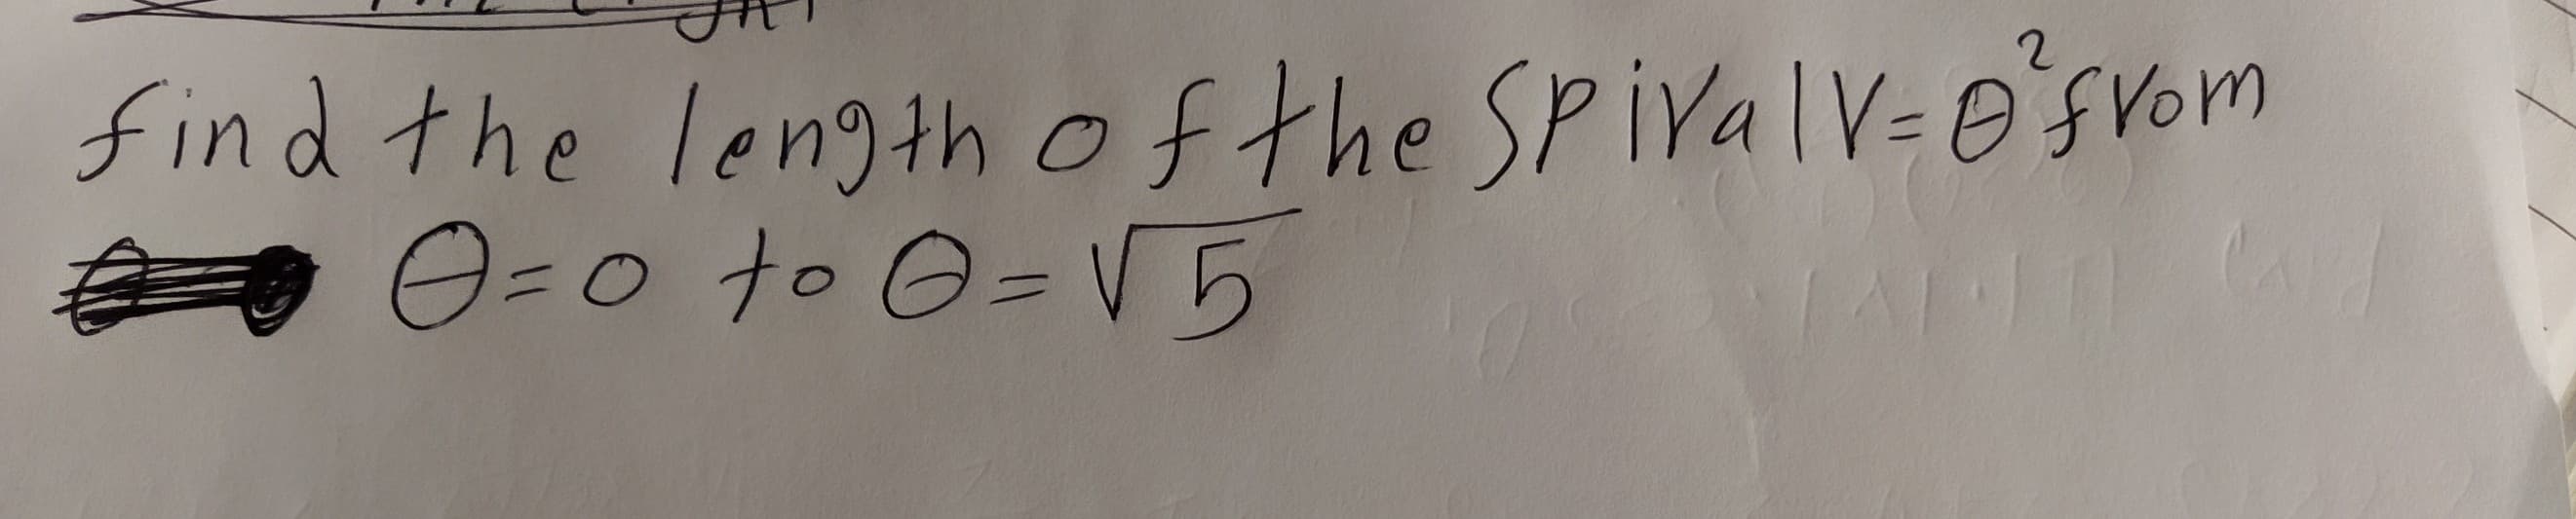 find the length of the SPIYAIV-e'sVom
0=0 to 0=V5
